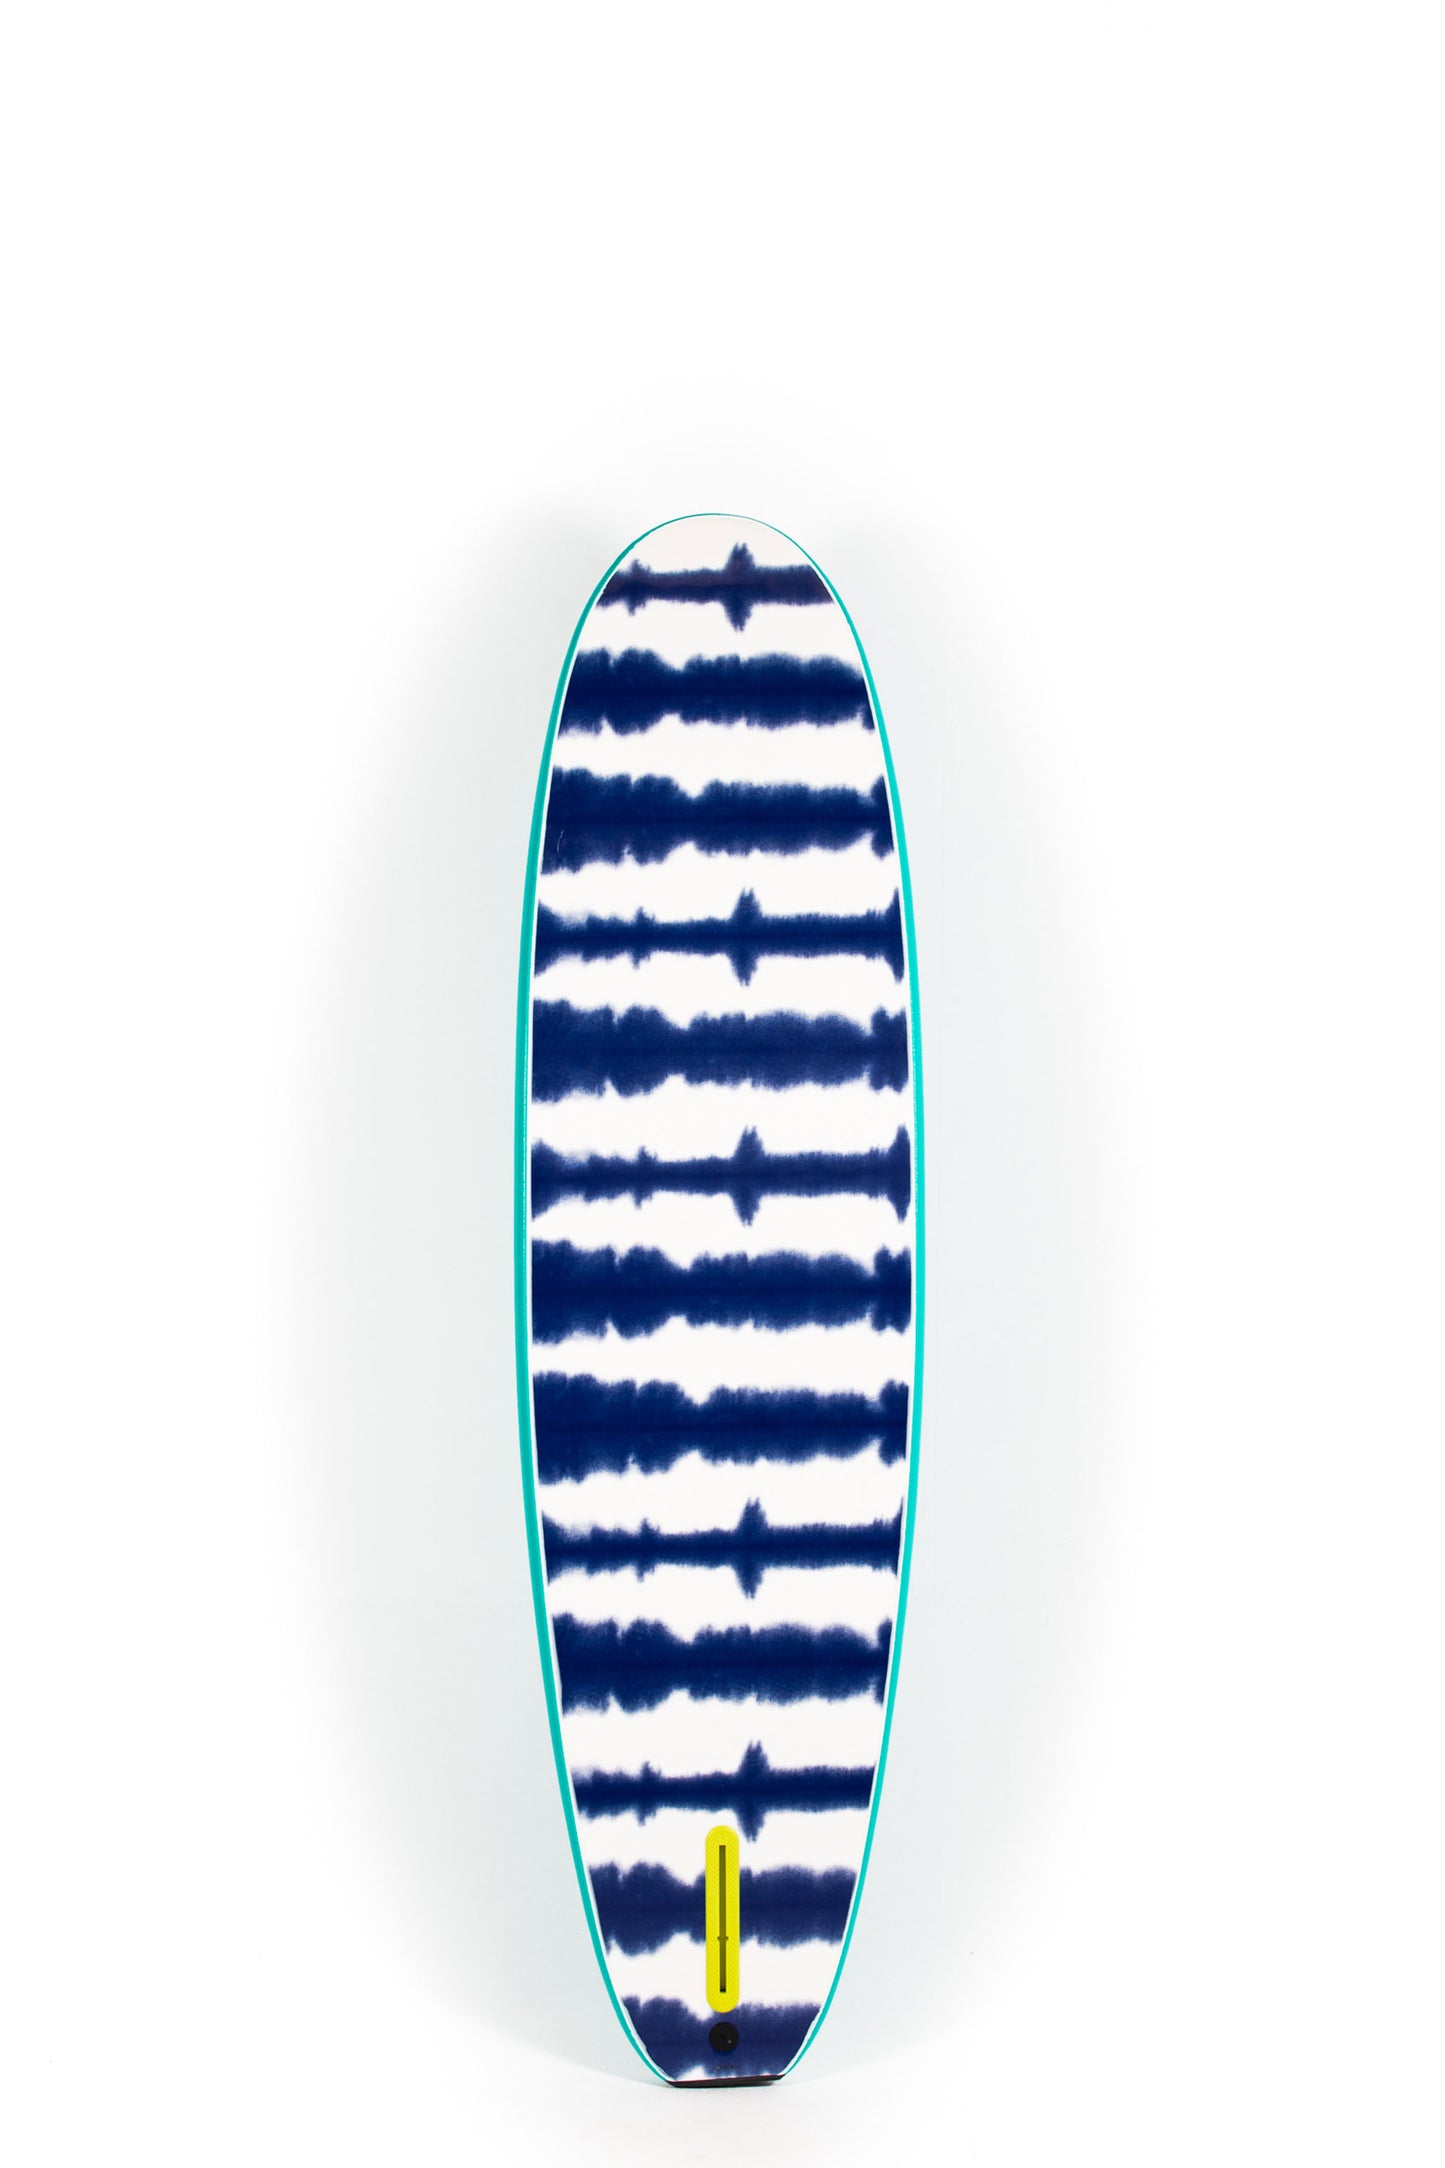 Pukas-Surf-Shop-Catch-Surf-Surfboards-Odysea-Plank